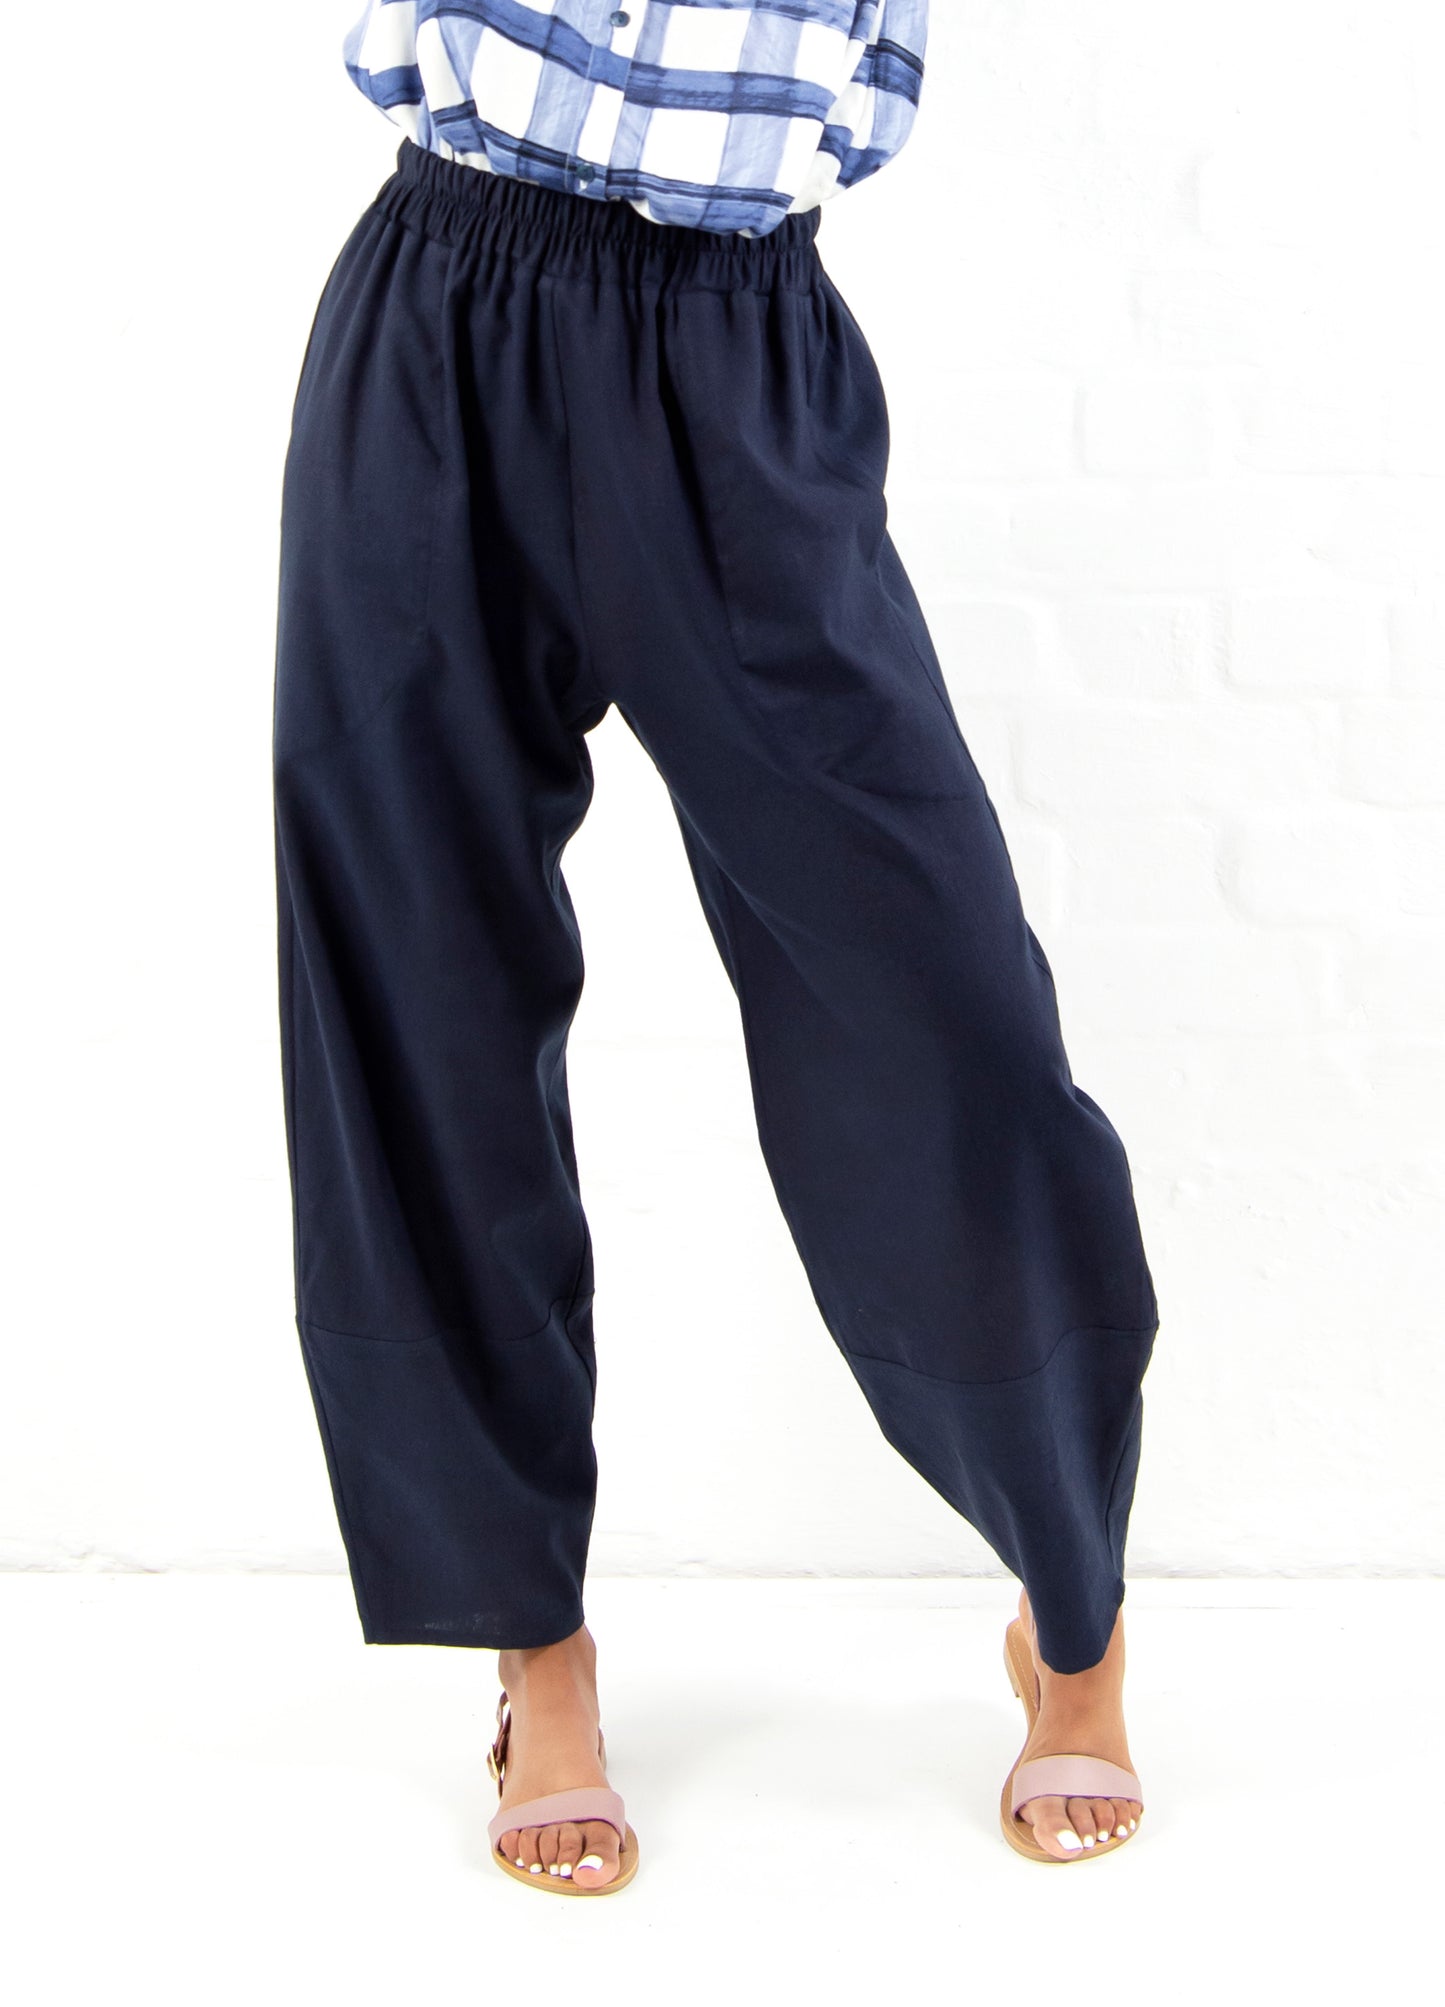 Sophie Lantern Trousers in Navy